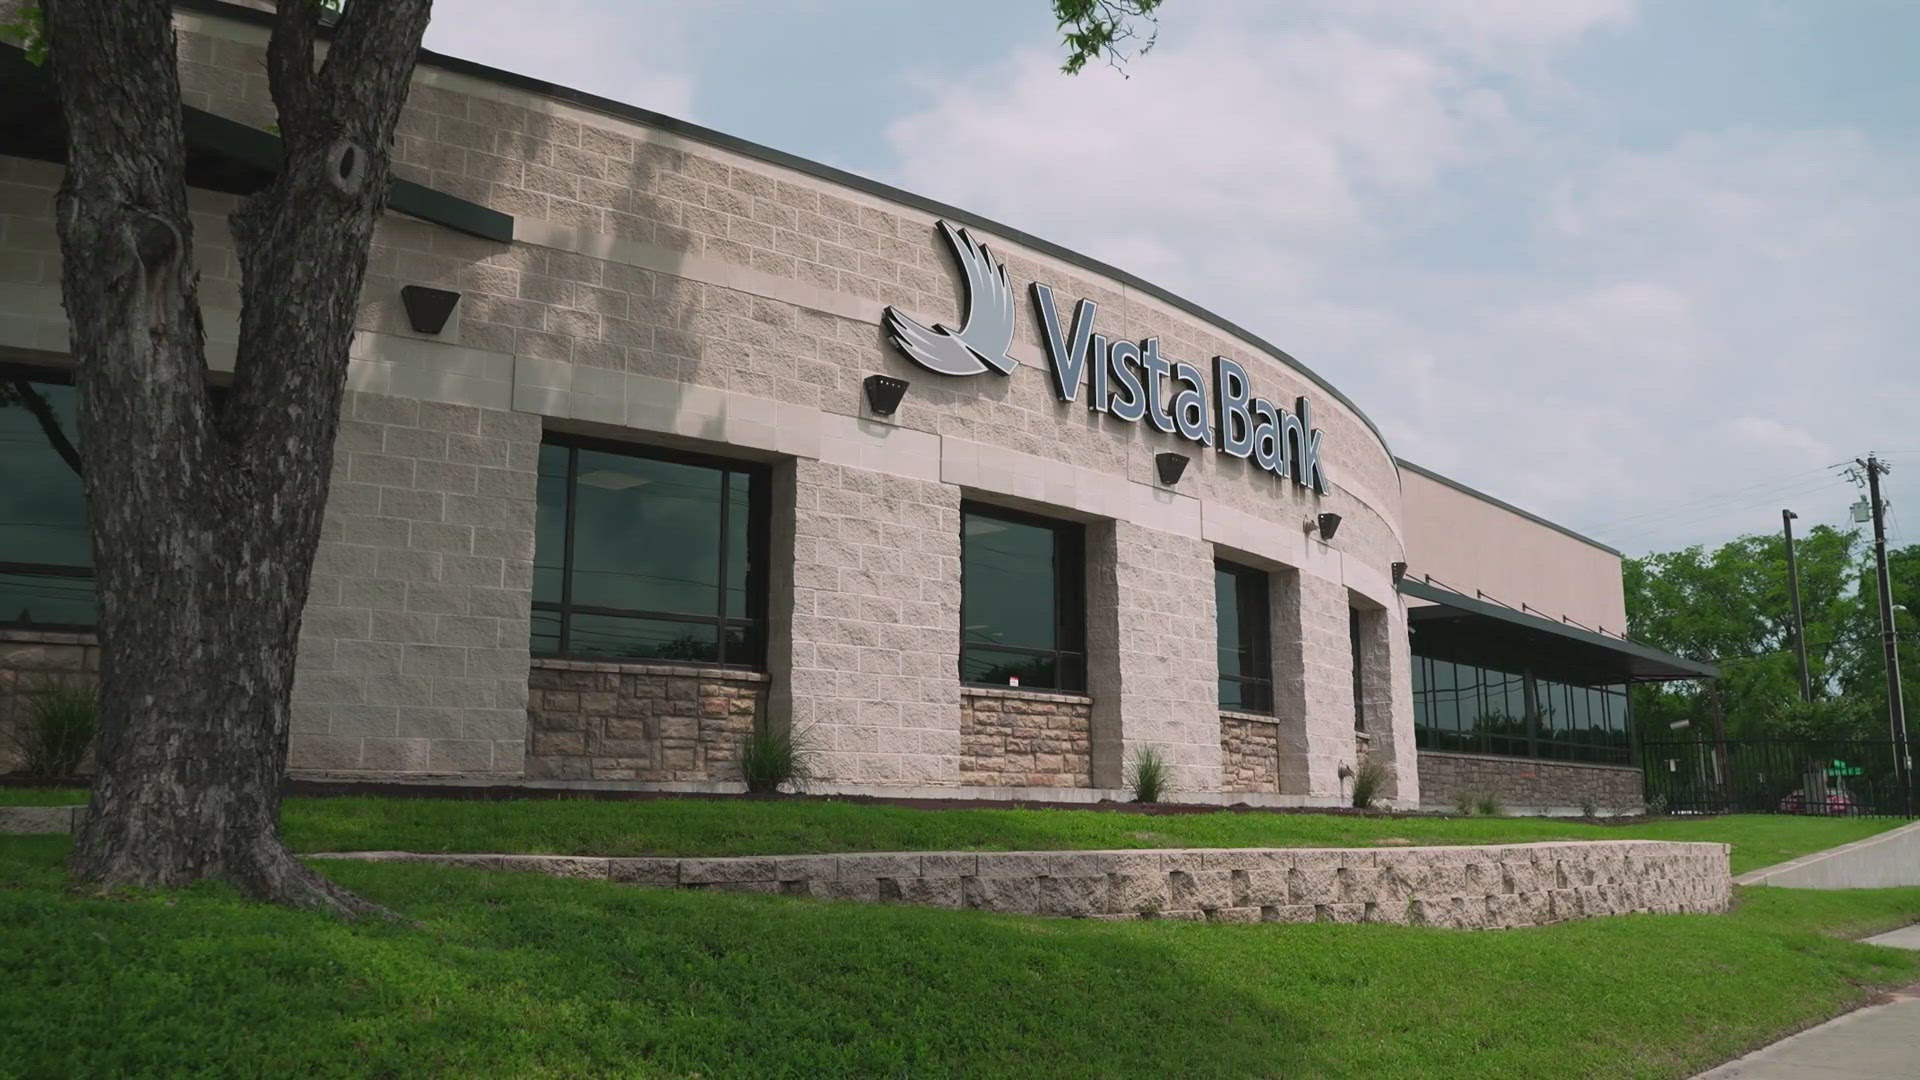 Vista Bank will also provide educational training through their Financial Literacy Center.